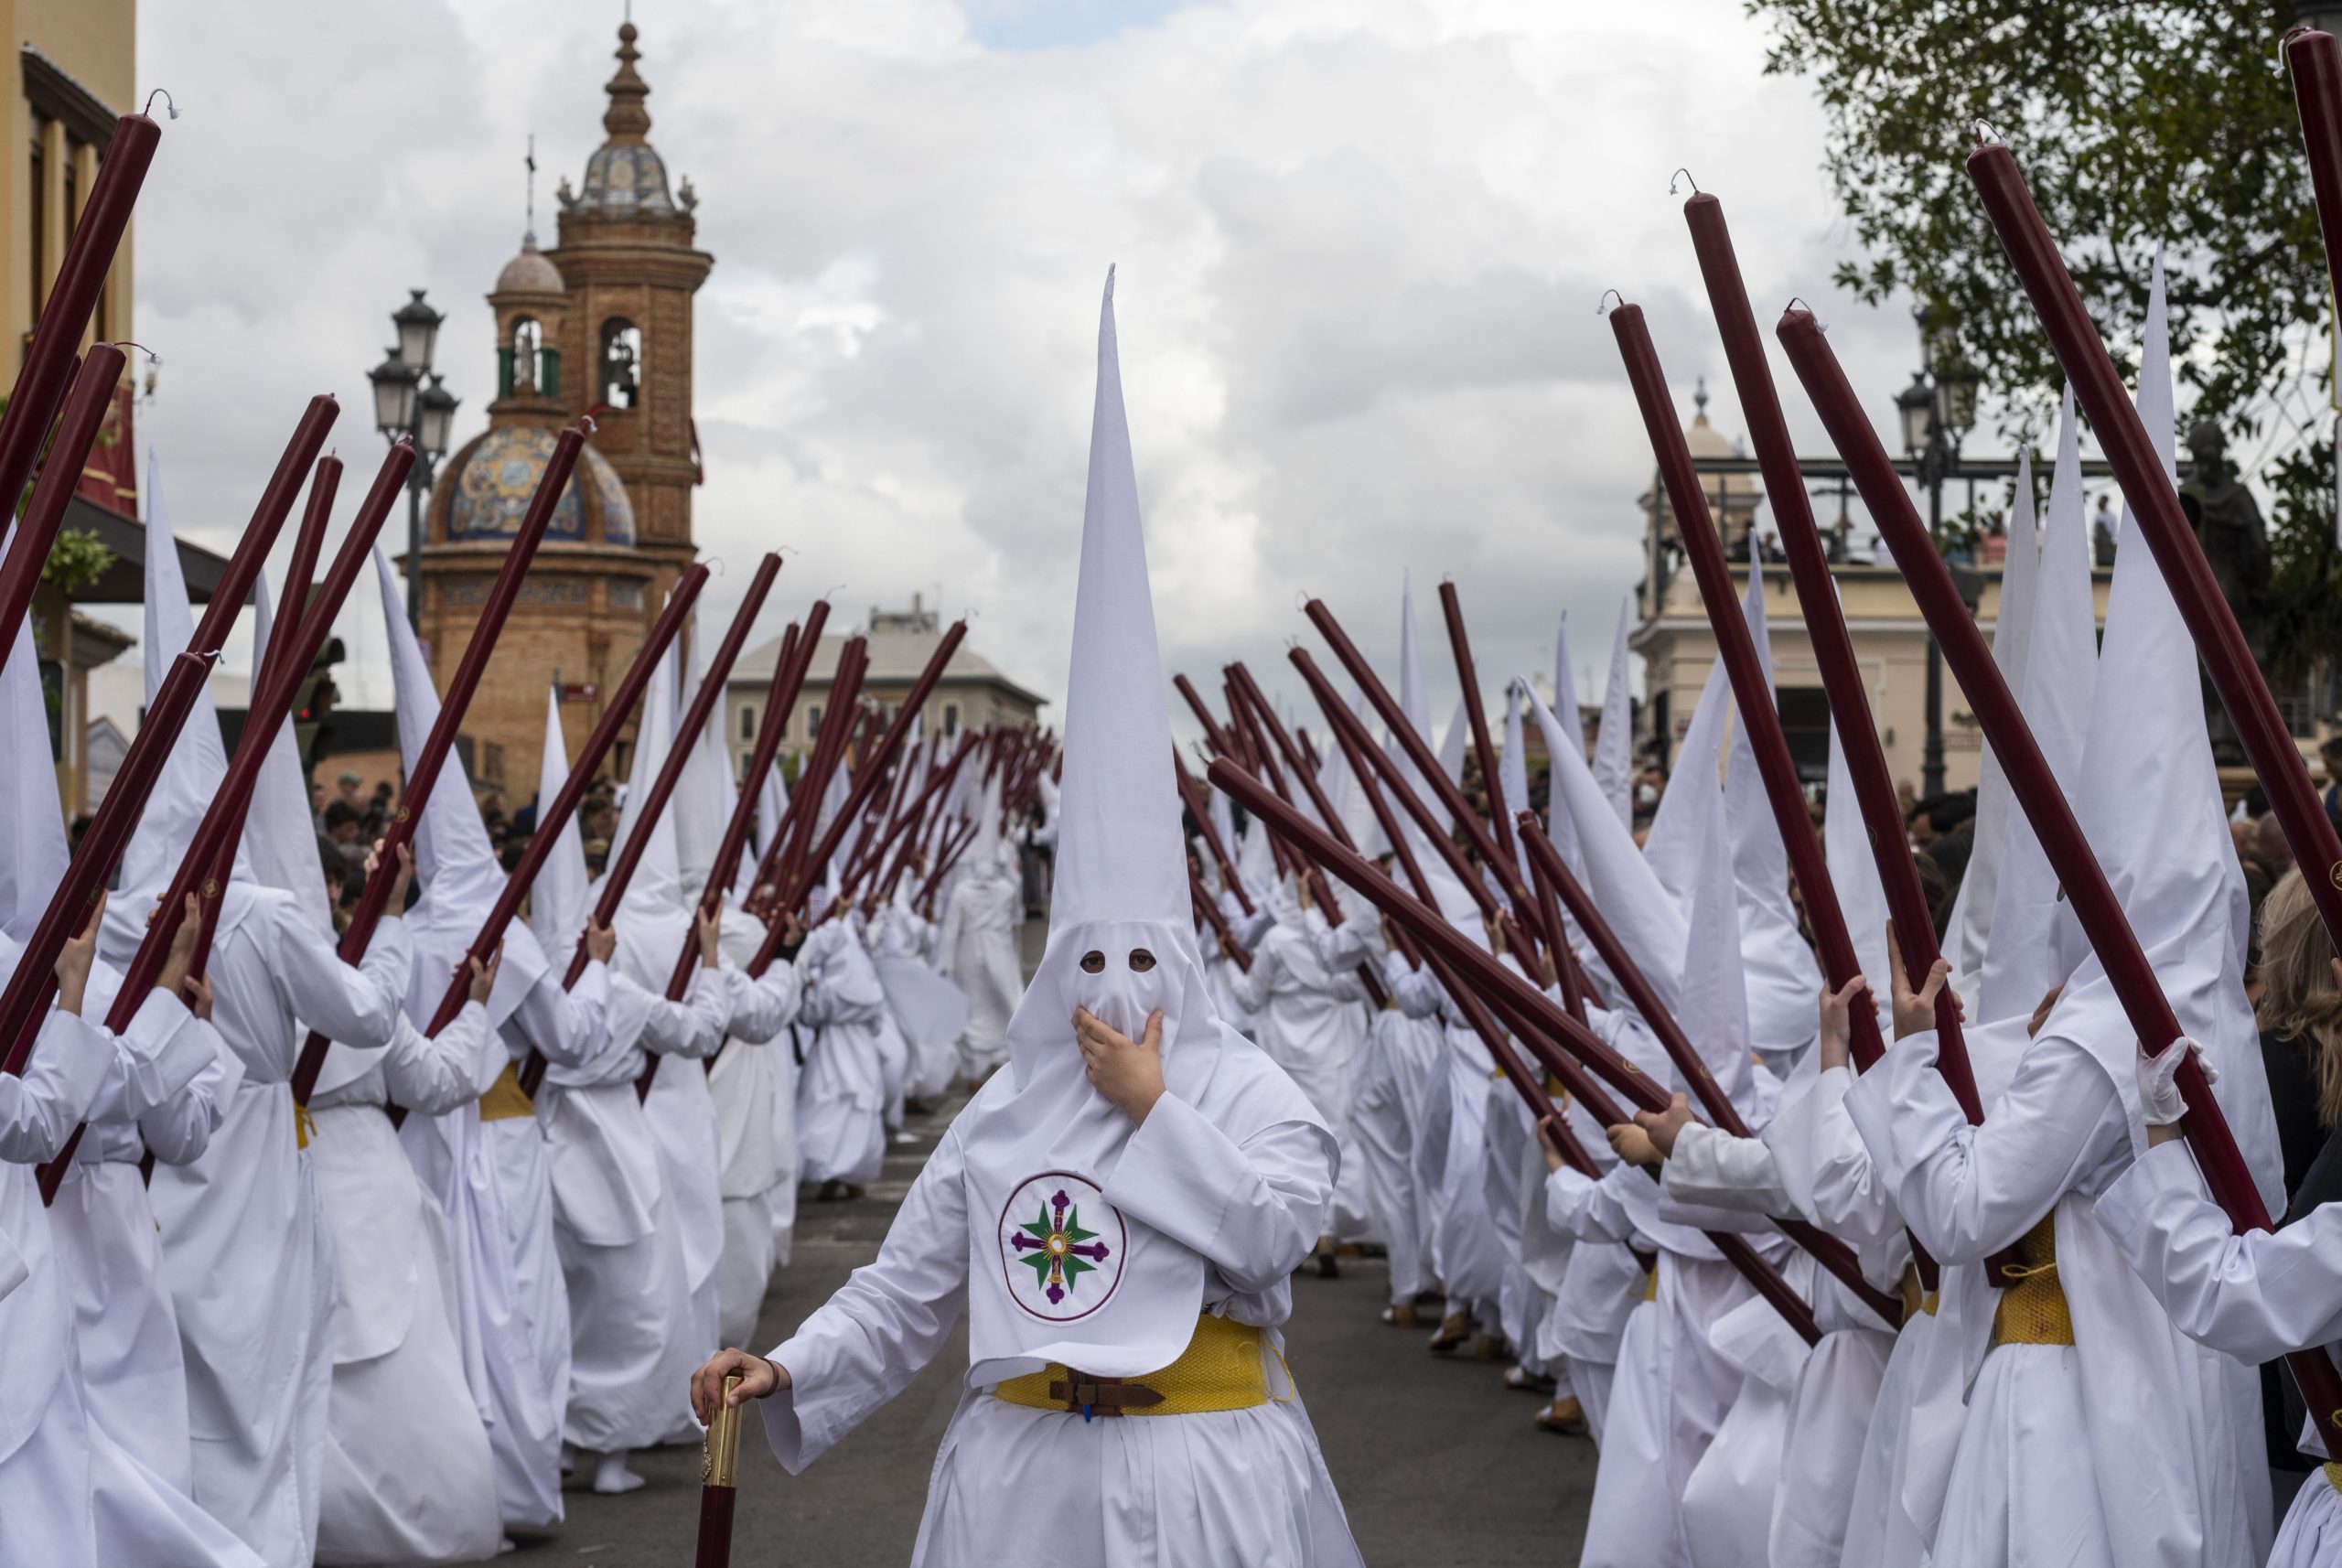 Holy Monday Celebrations In Seville, Spain 11 Apr 2022